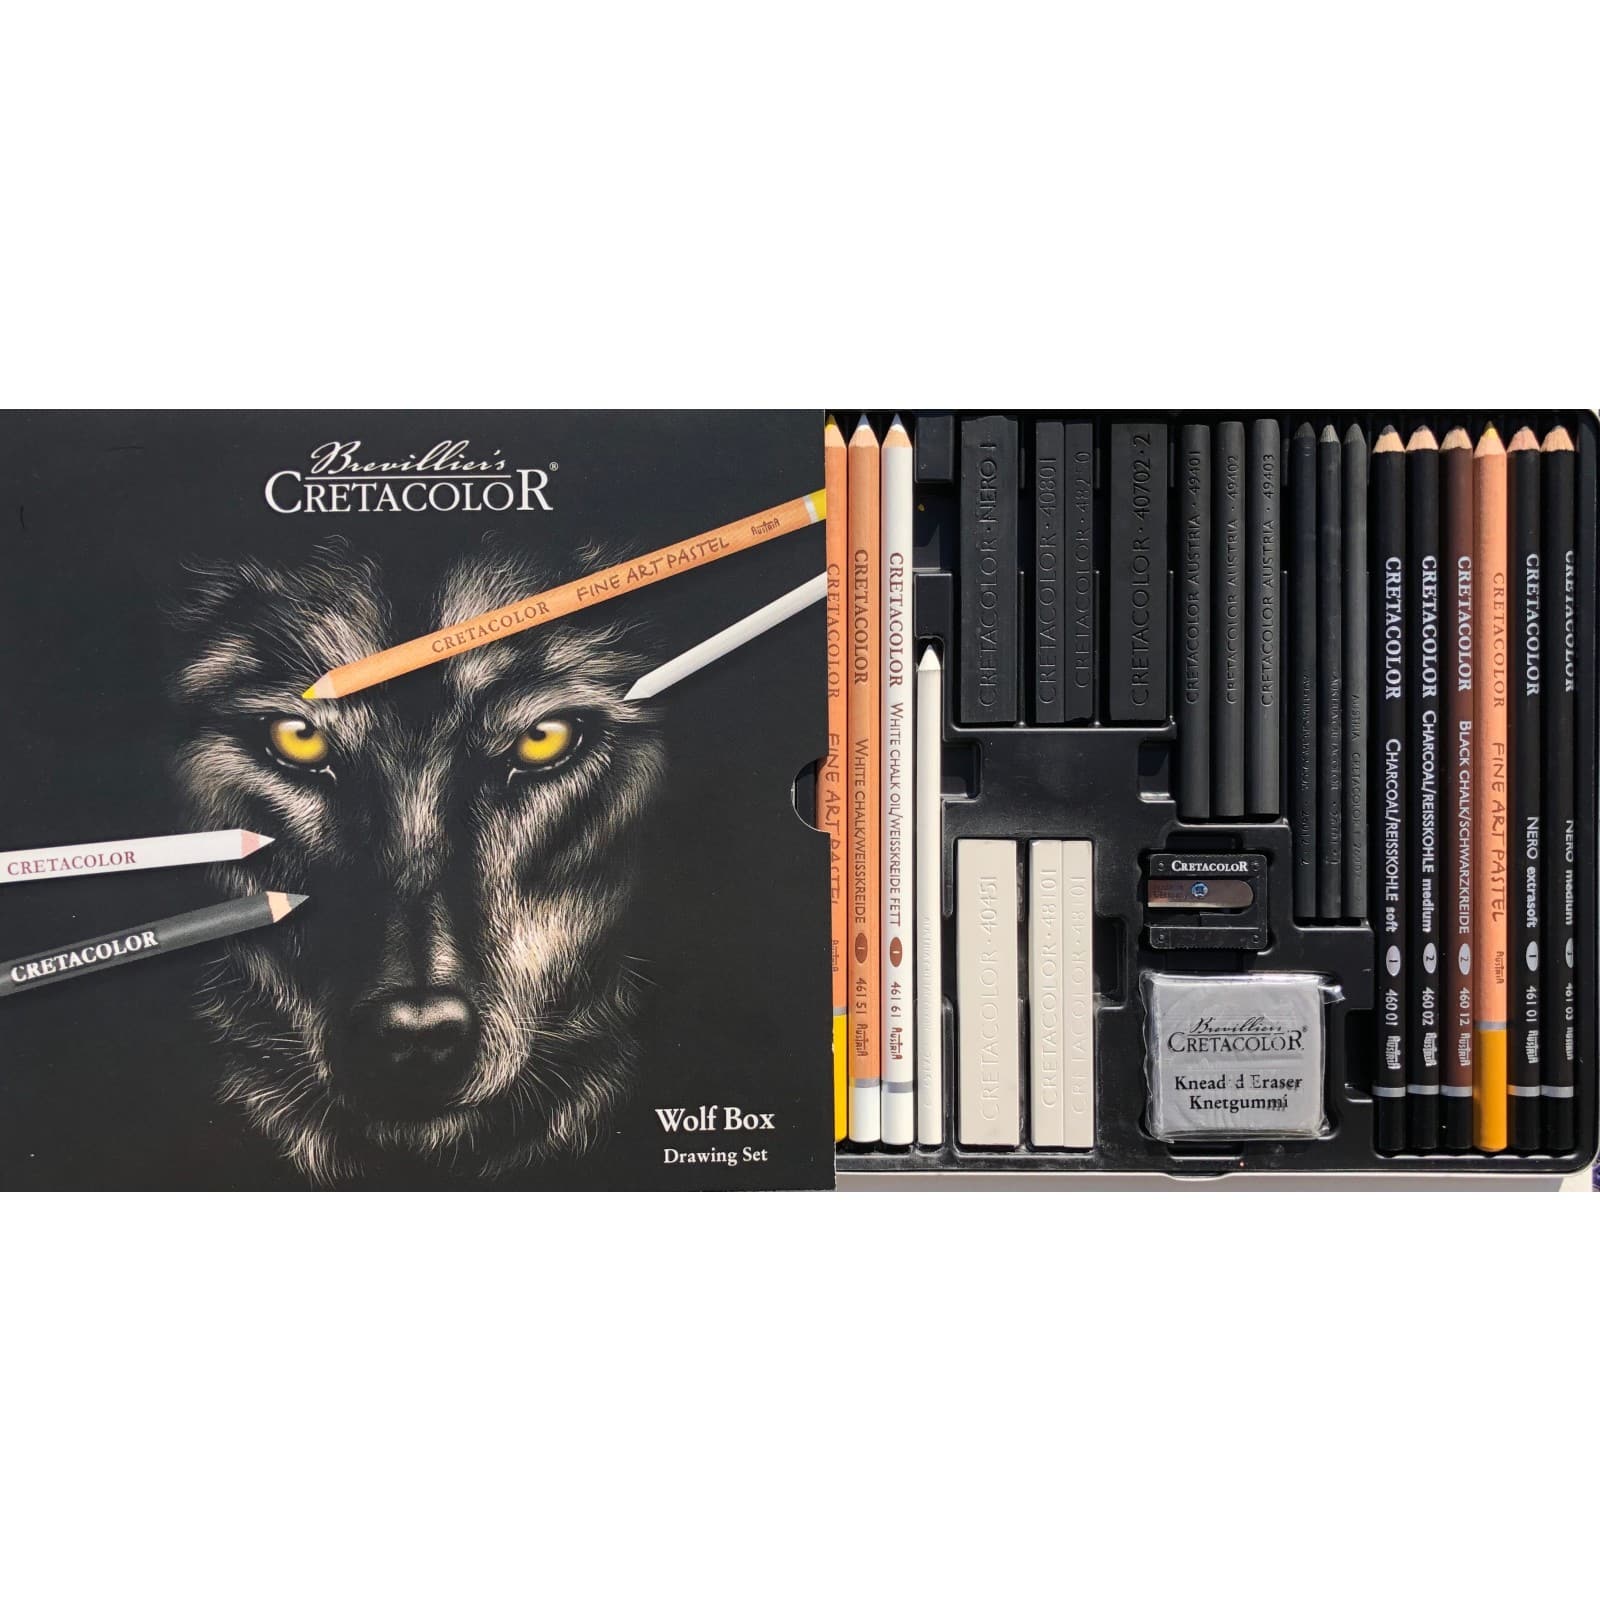 Cretacolor Compressed Charcoal Medium Sticks, Box of 12